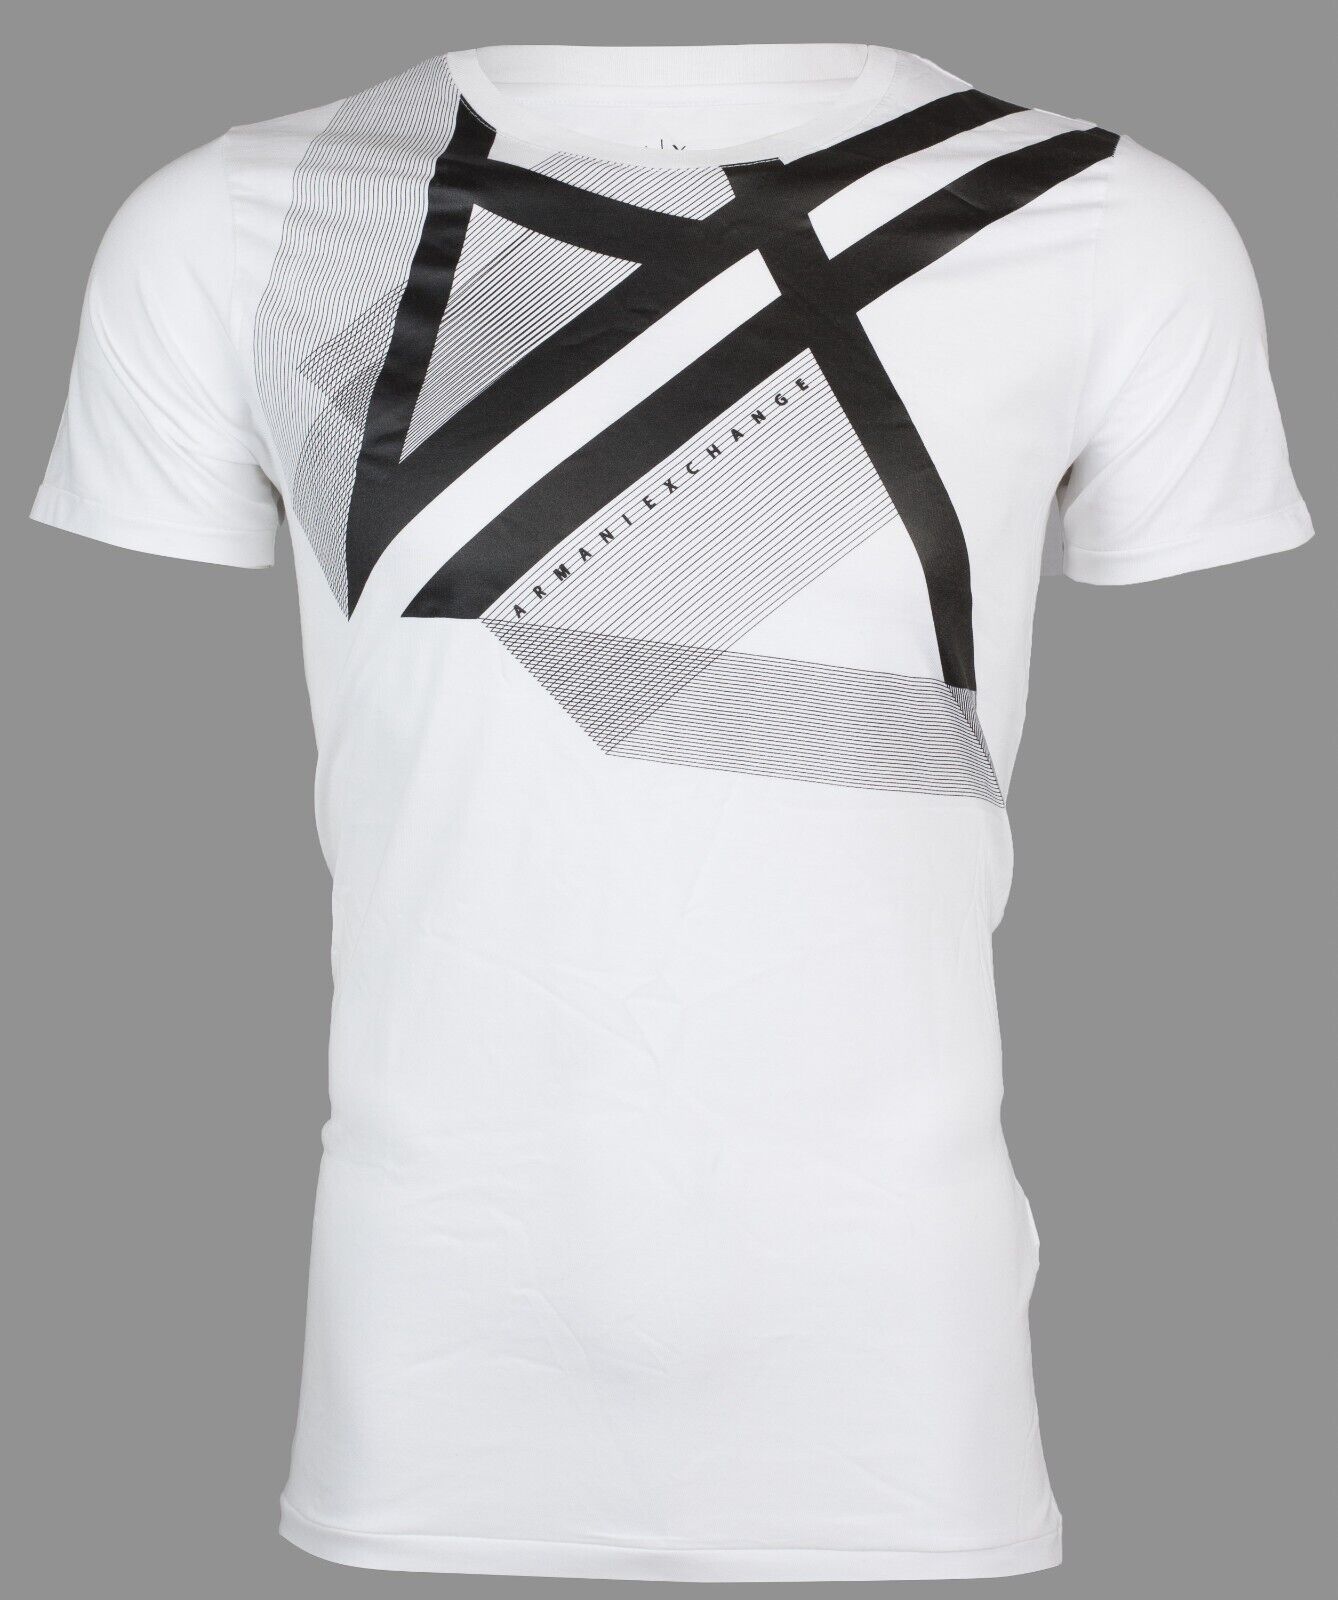 ARMANI EXCHANGE White RIGHT SIDE UP Short Sleeve Slim Fit Designer T-shirt NWT